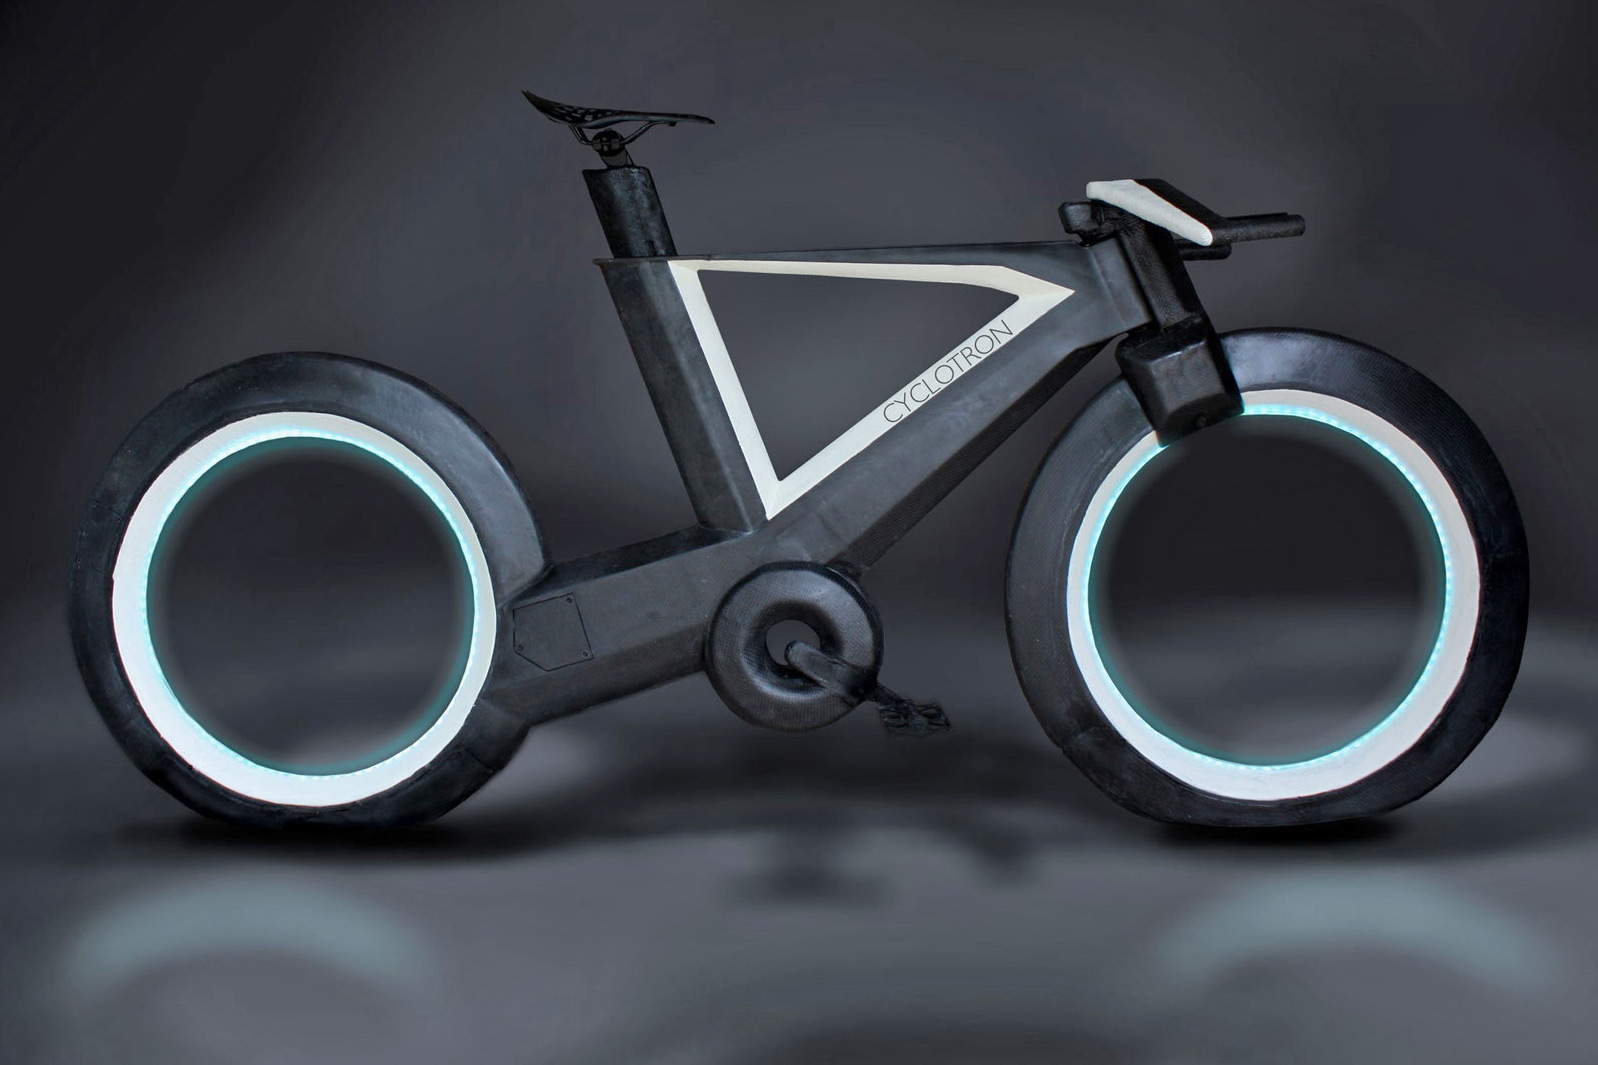 Cyclotron: a hubless, spokeless bike getting funded on Kickstarter